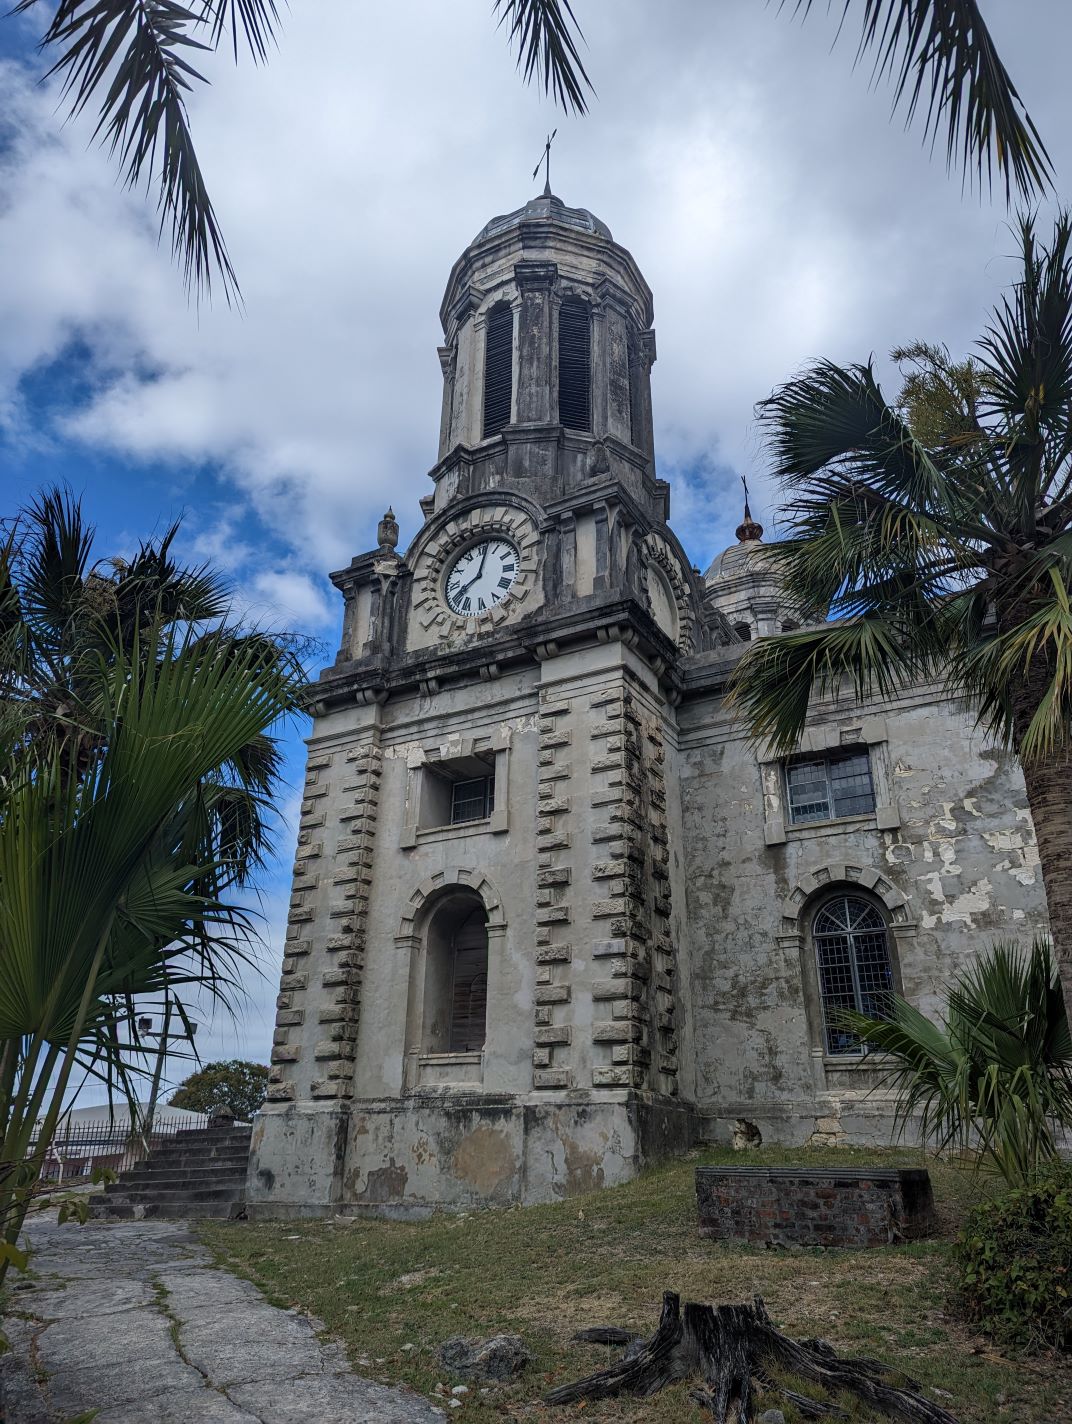 St John’s, Antigua